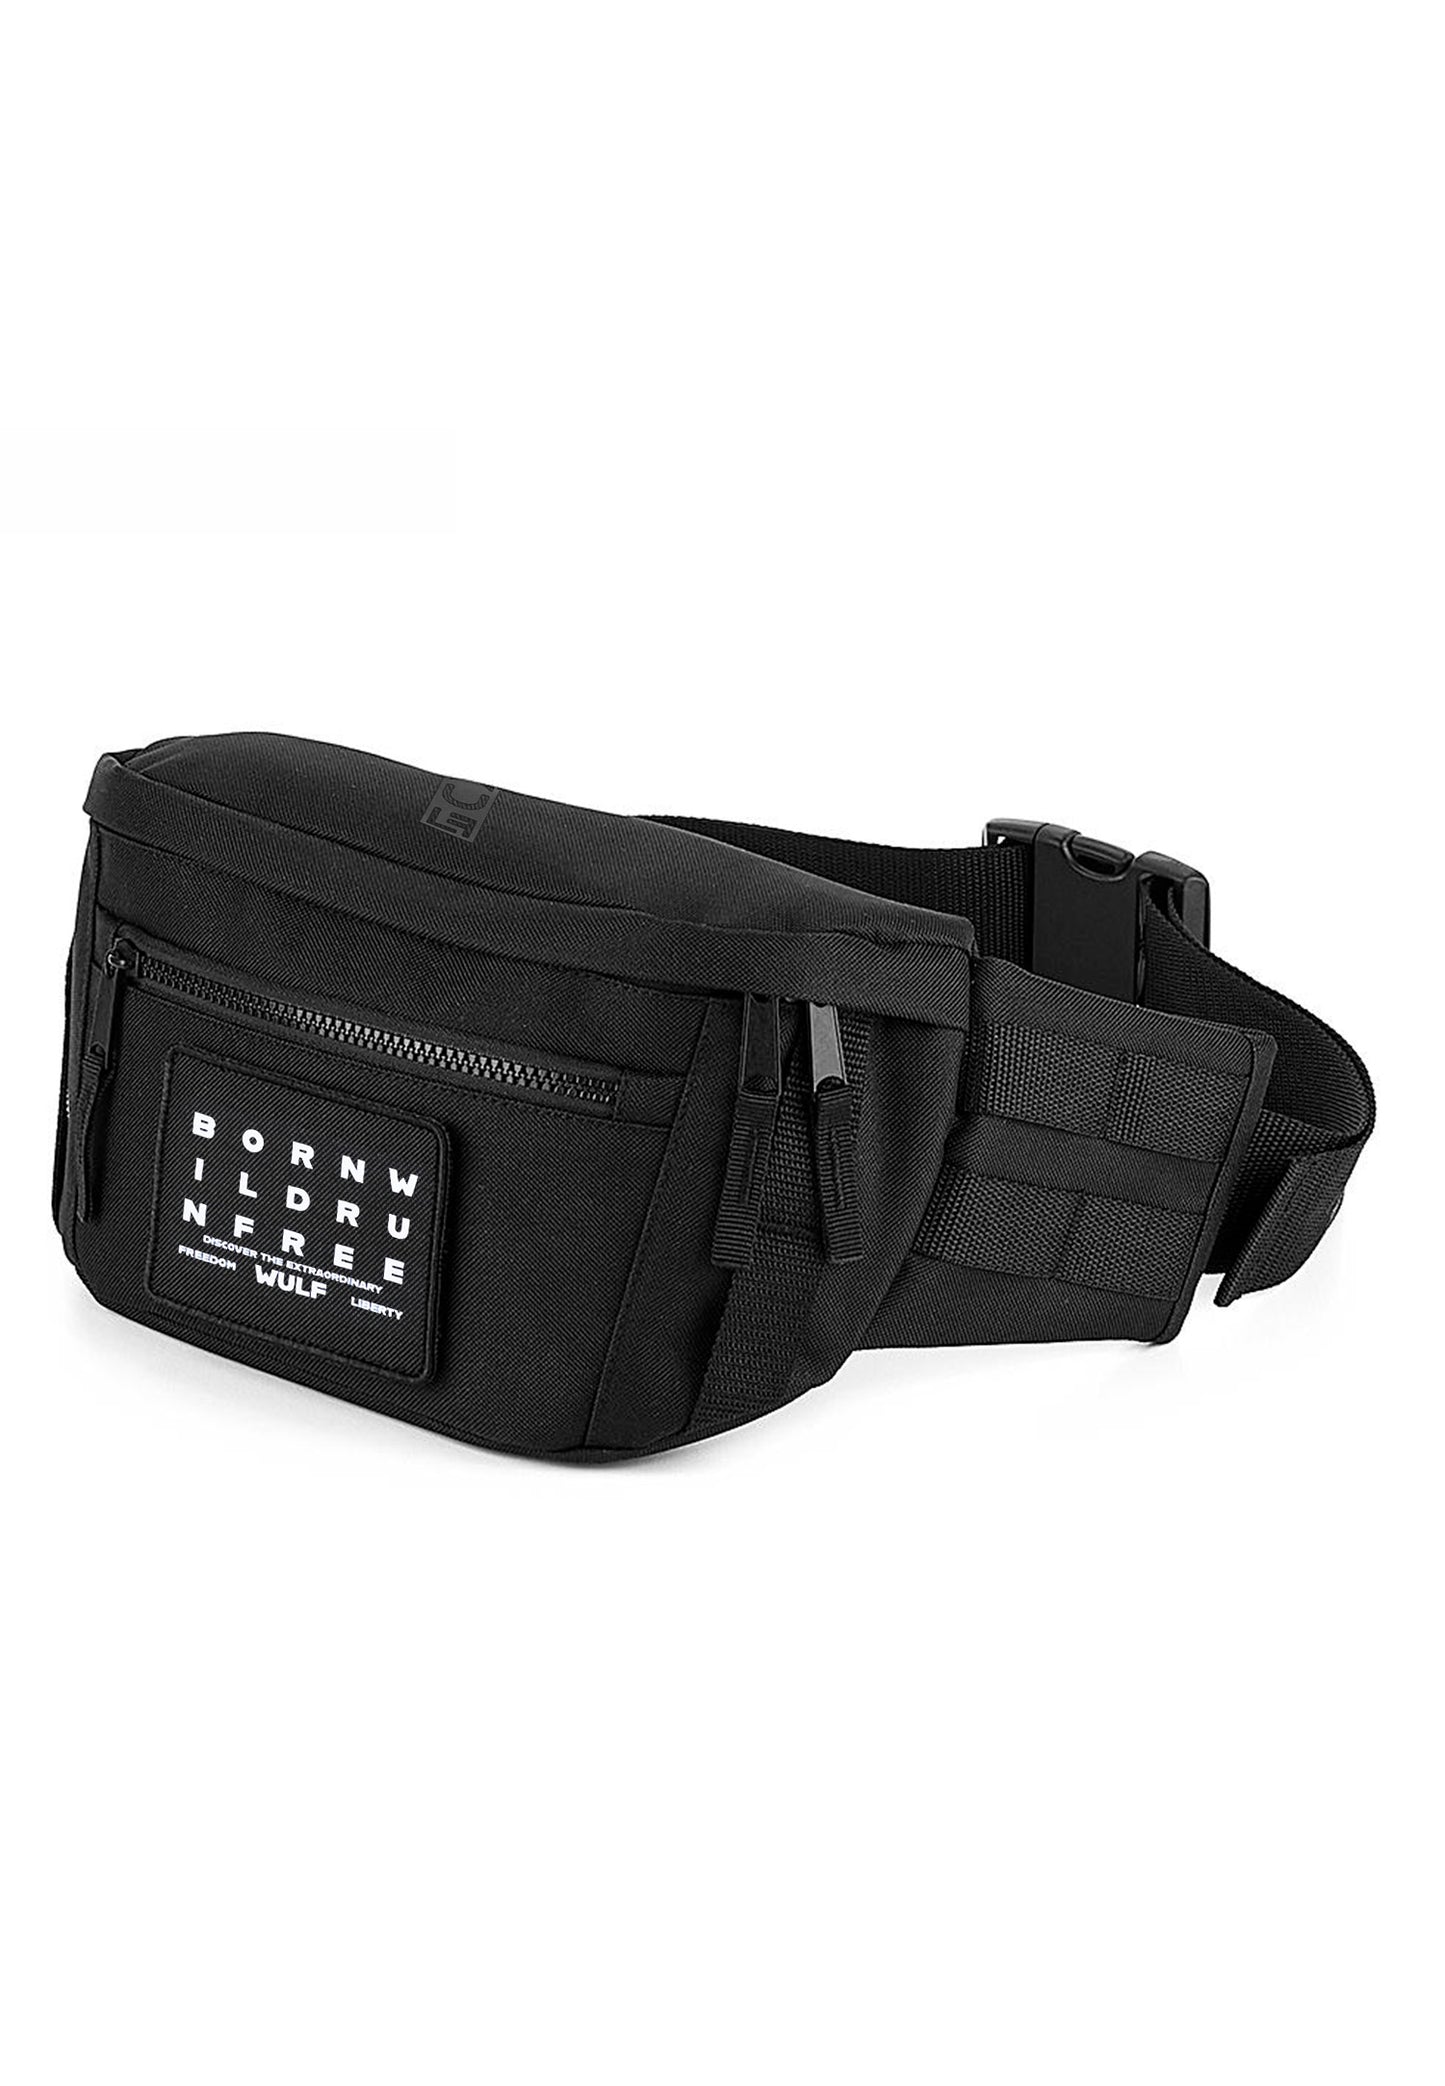 70°113 Tactical Waist Bag, Black Reflector